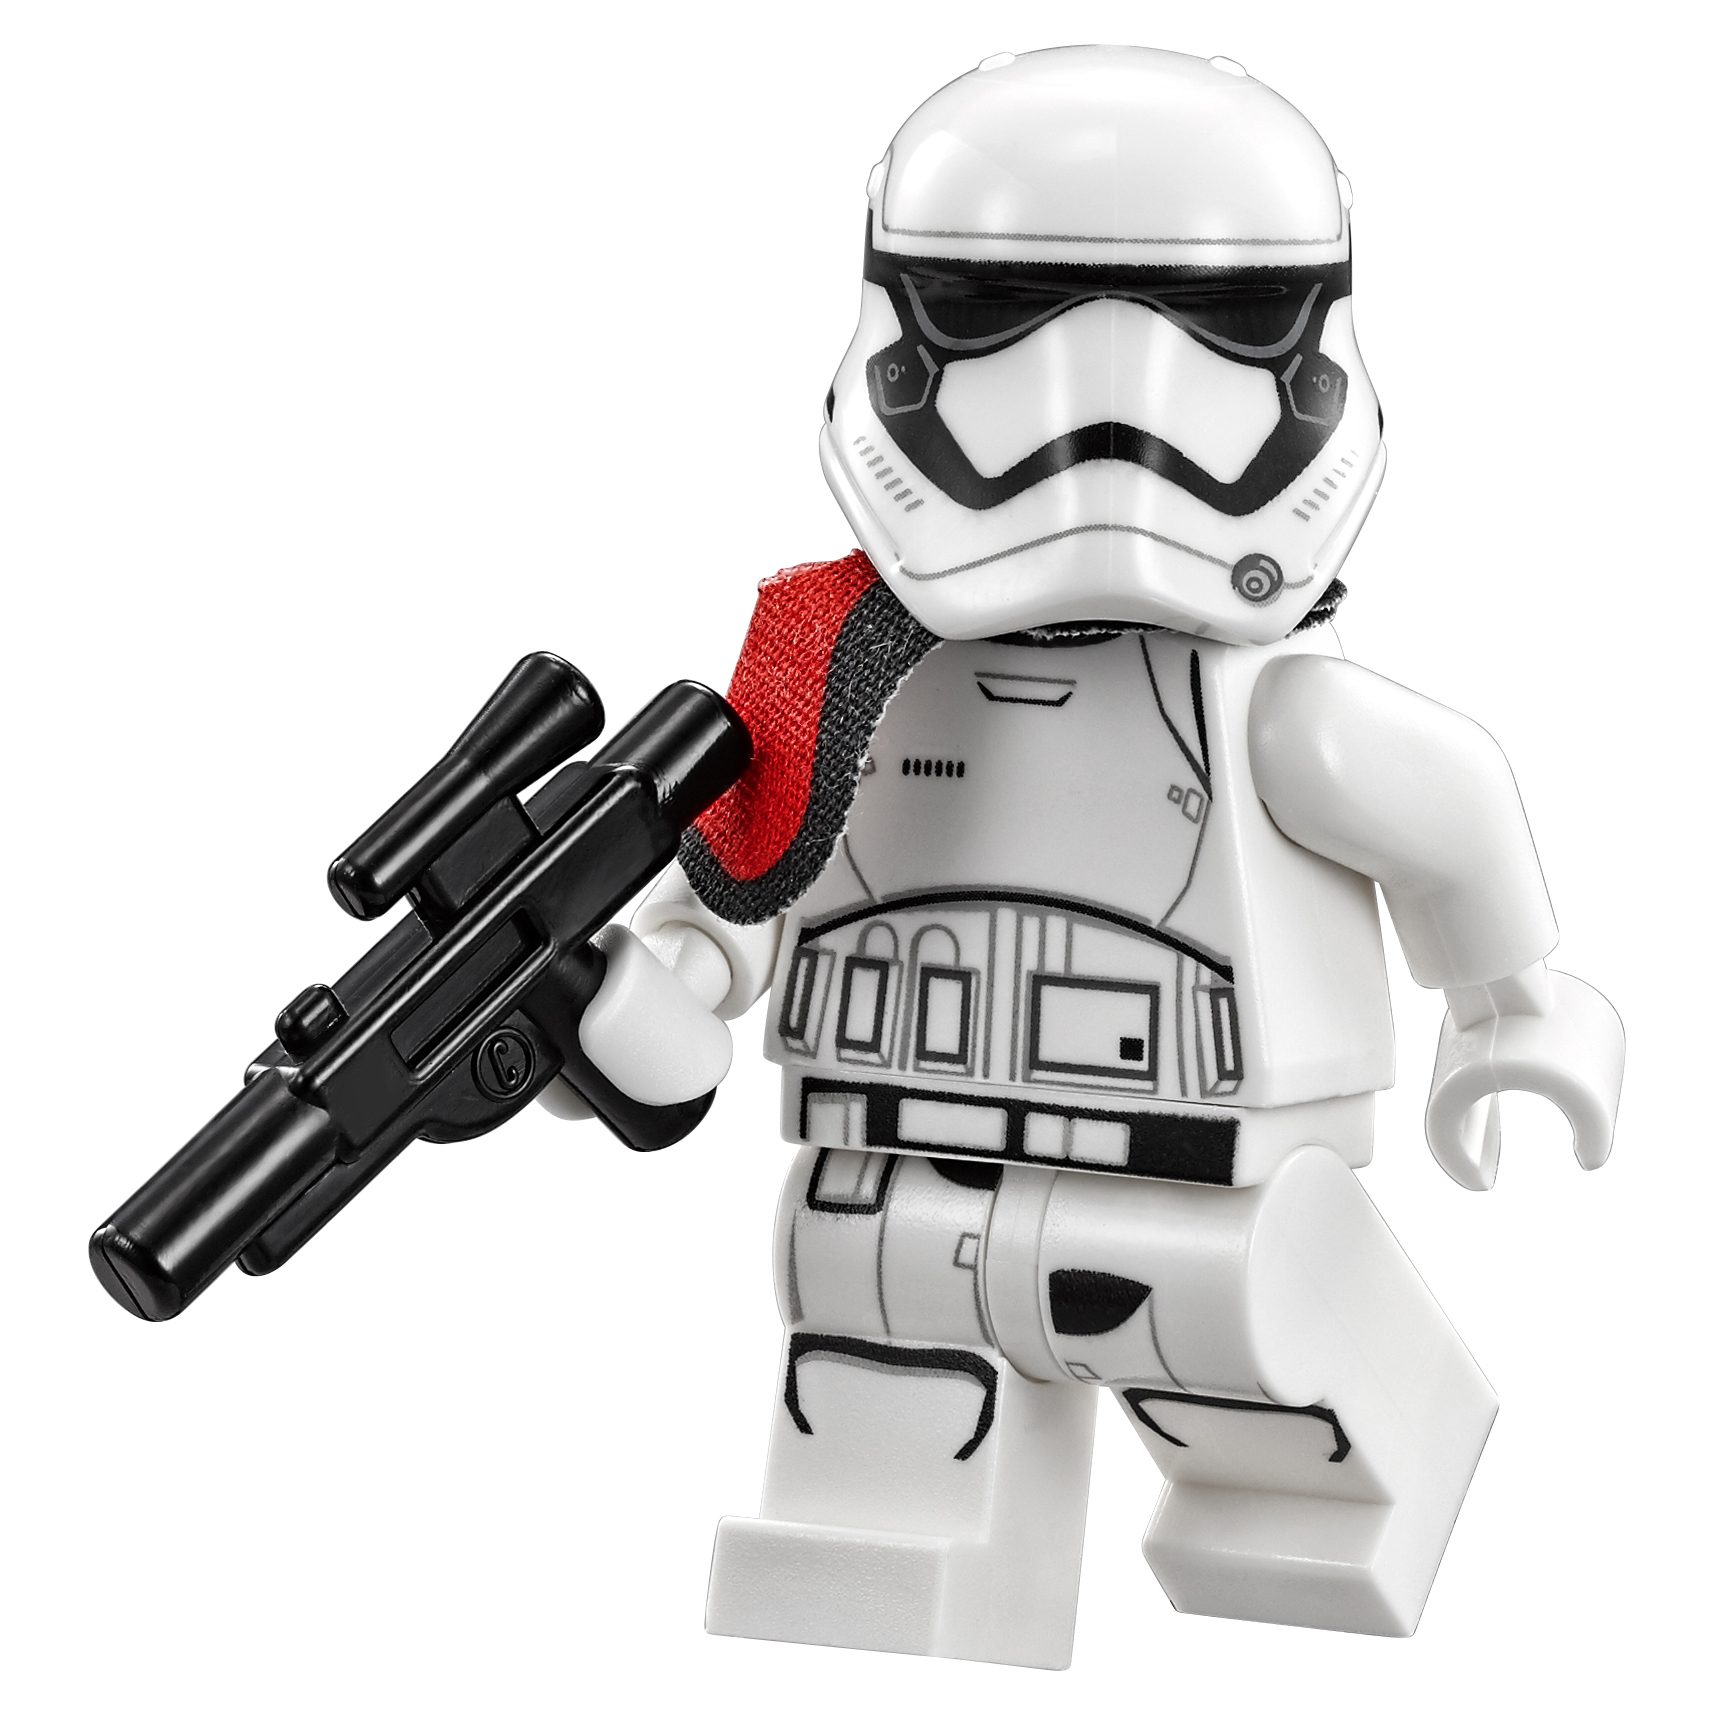 Конструктор LEGO Star Wars Командный шаттл Кайло Рена (Kylo Rens Command Shuttle) (75104)